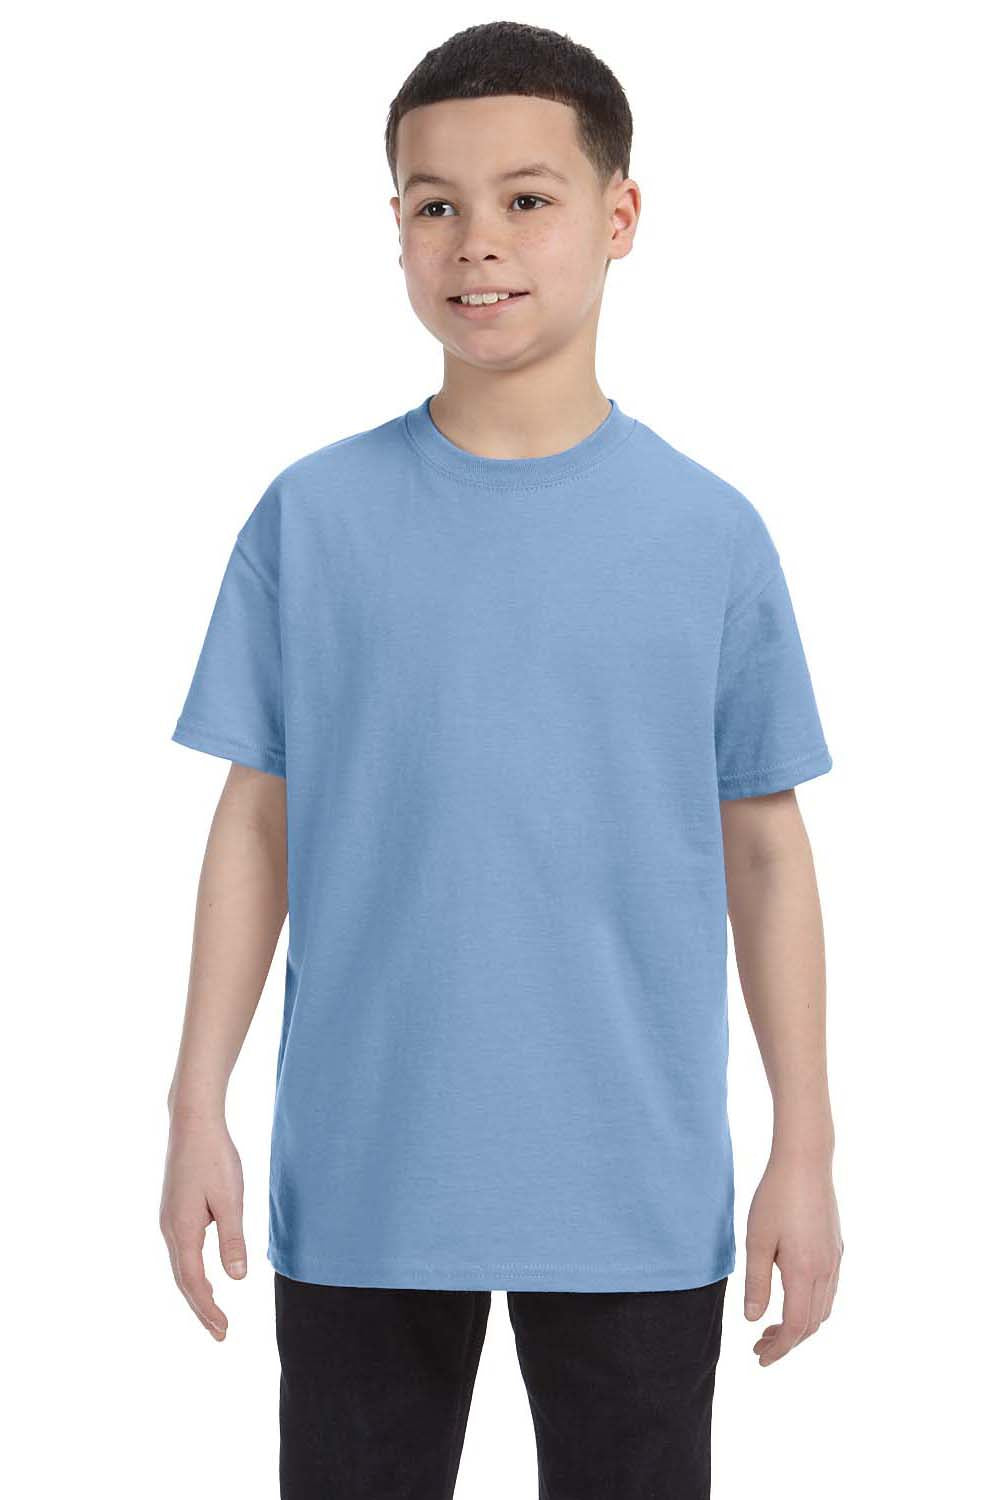 Hanes 54500 Youth ComfortSoft Short Sleeve Crewneck T-Shirt Light Blue Front